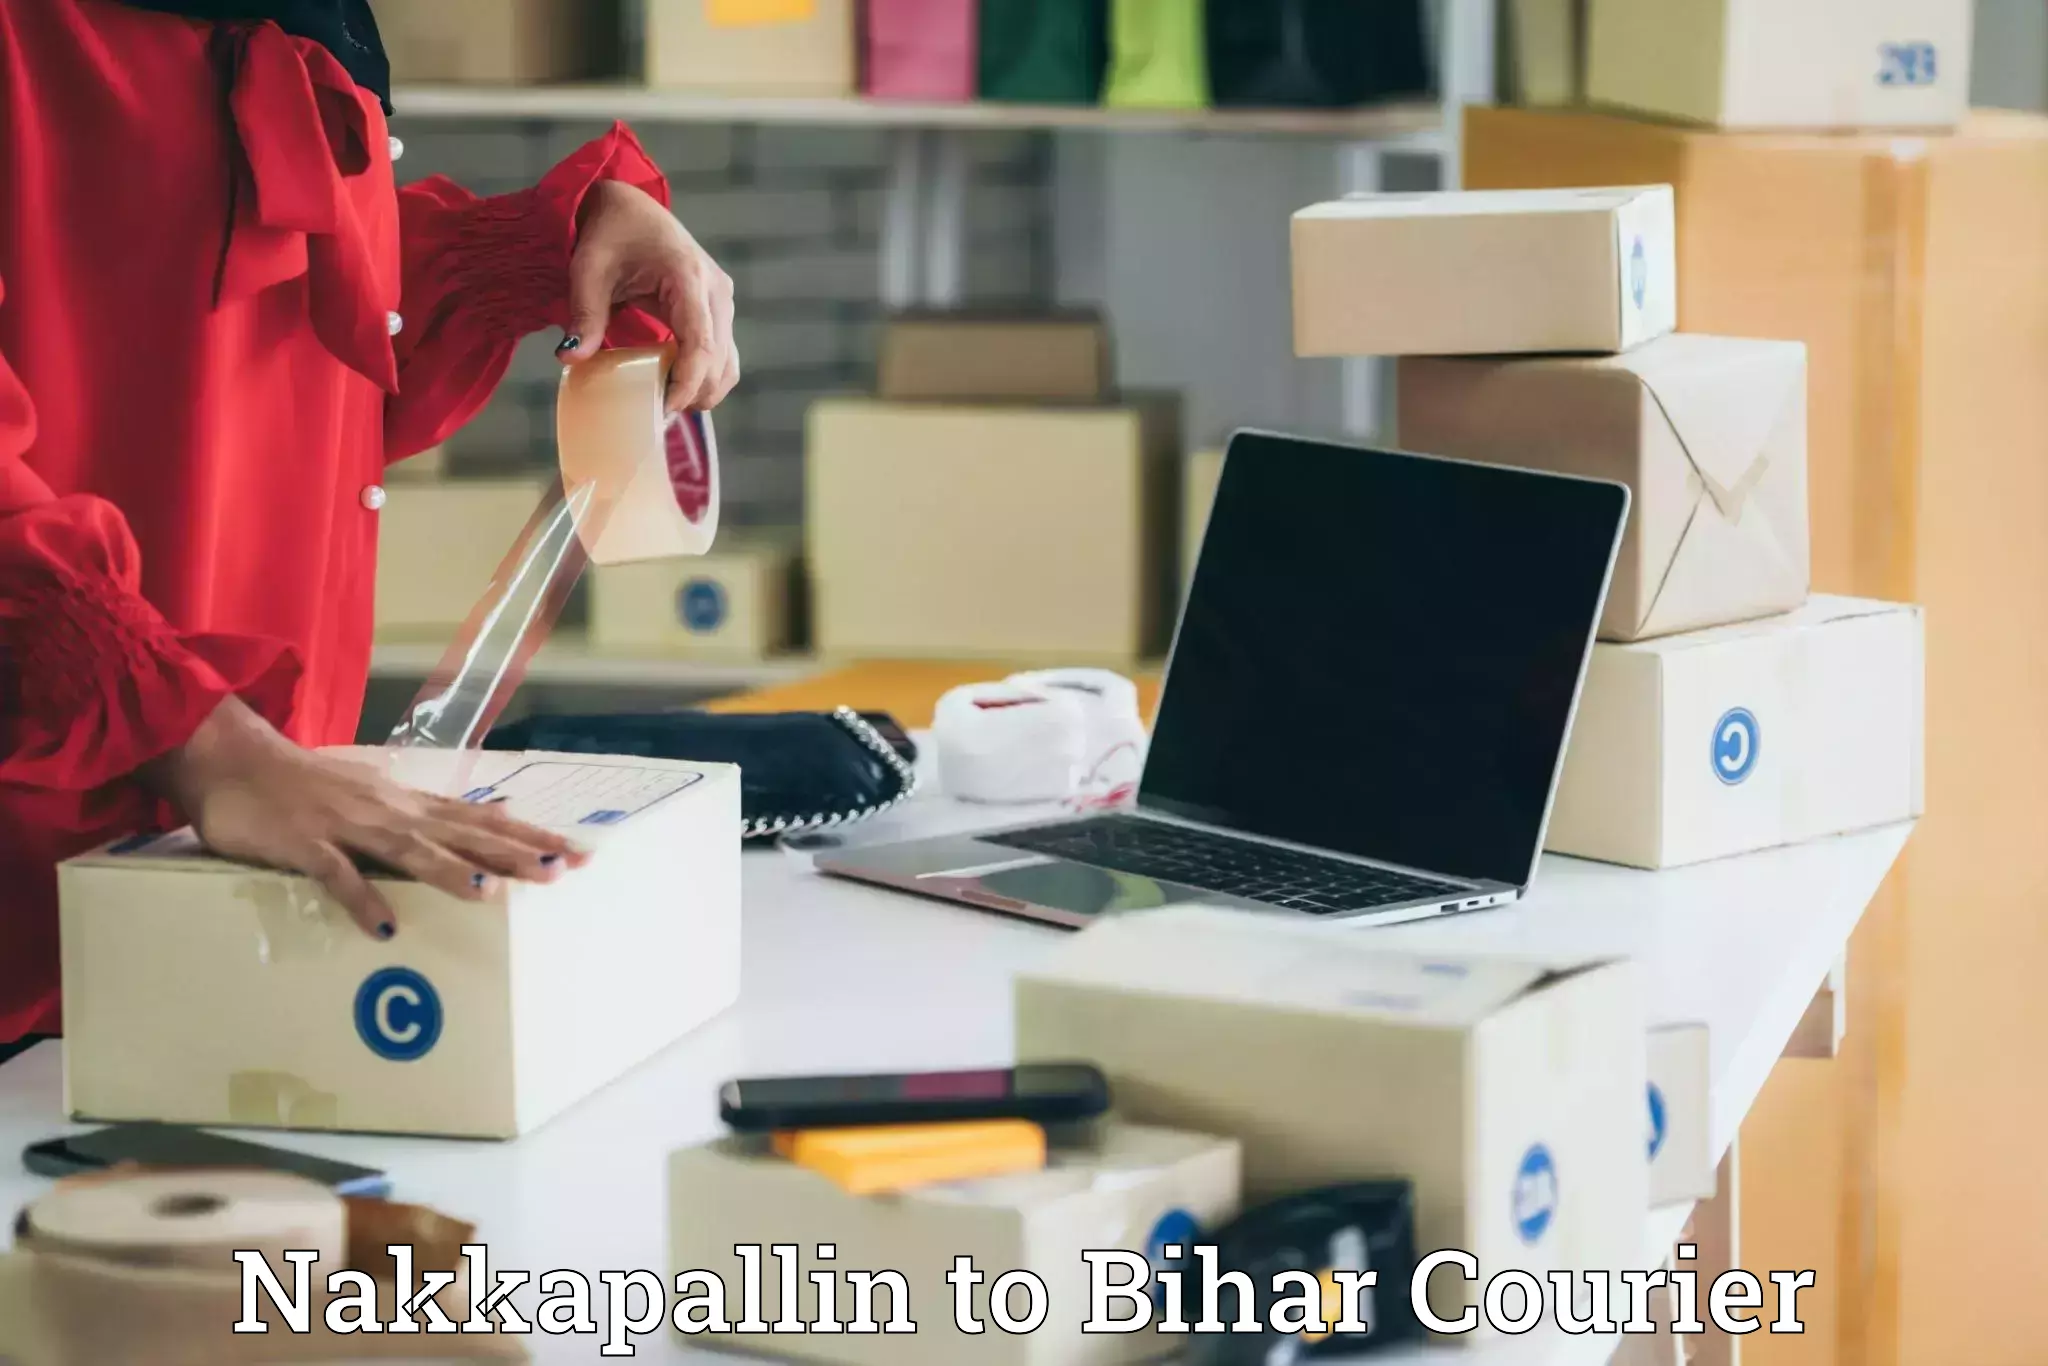 Reliable delivery network Nakkapallin to Bihar